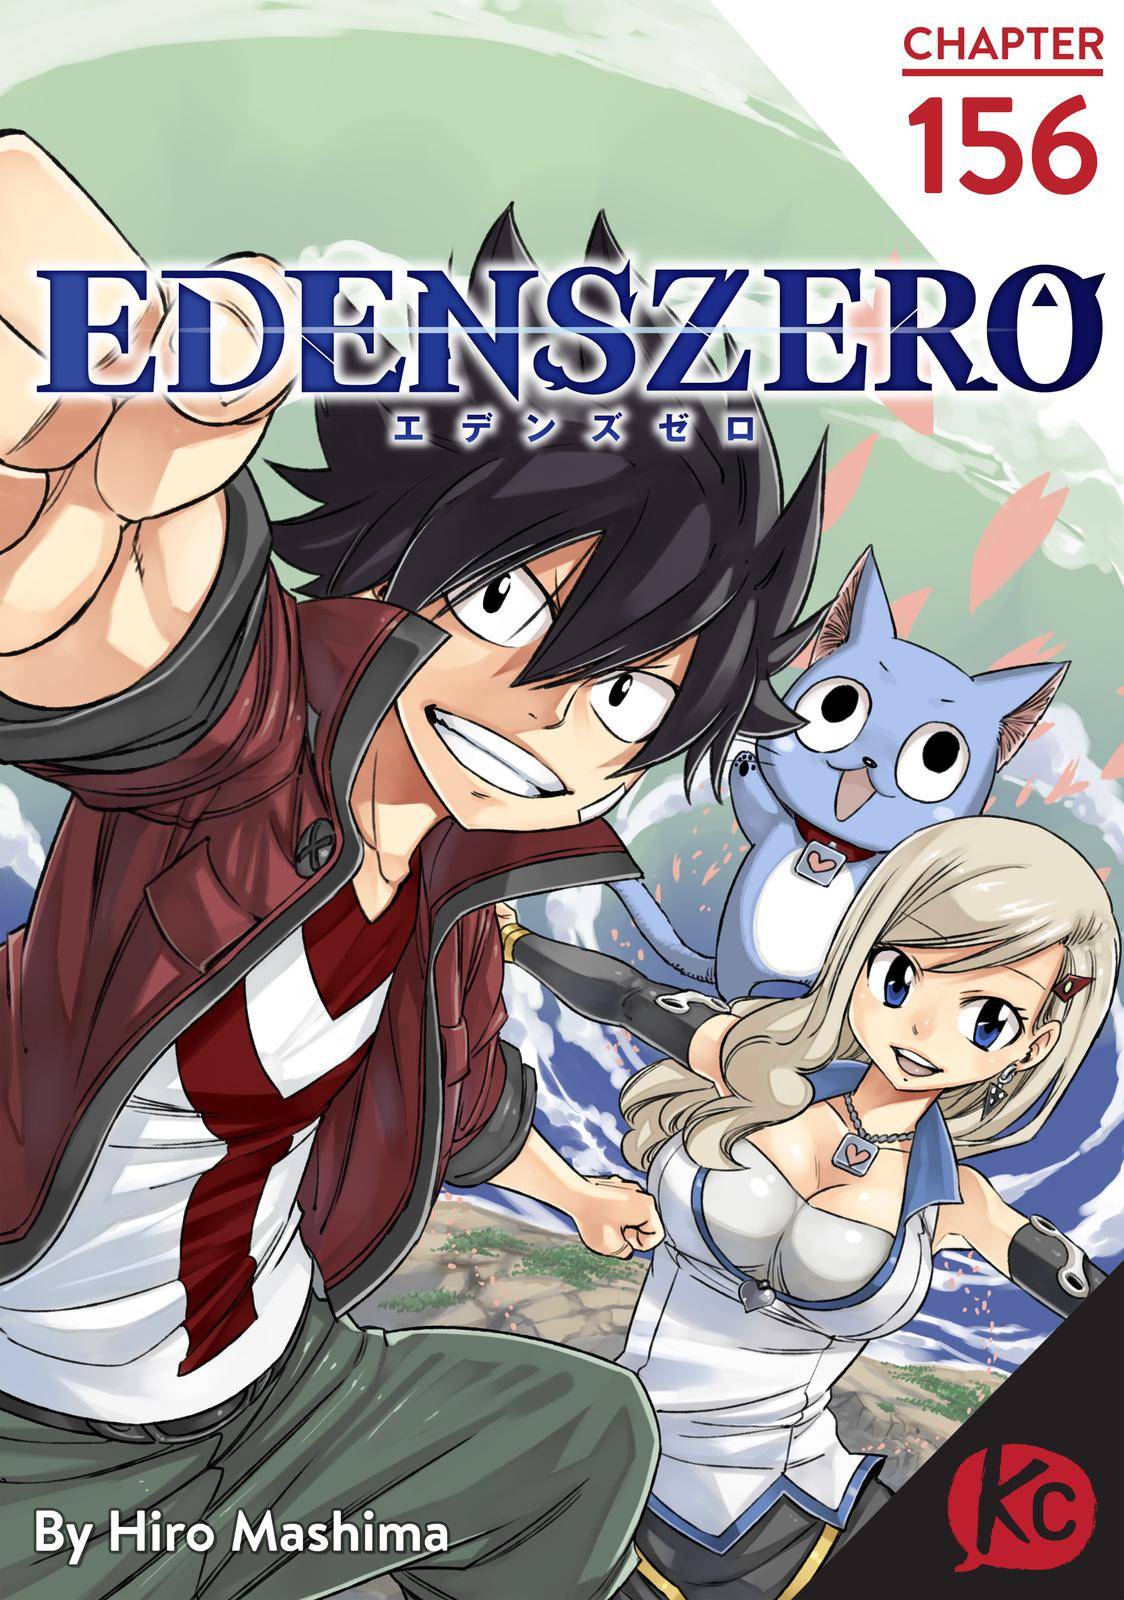 Eden's Zero chapter 156 page 1